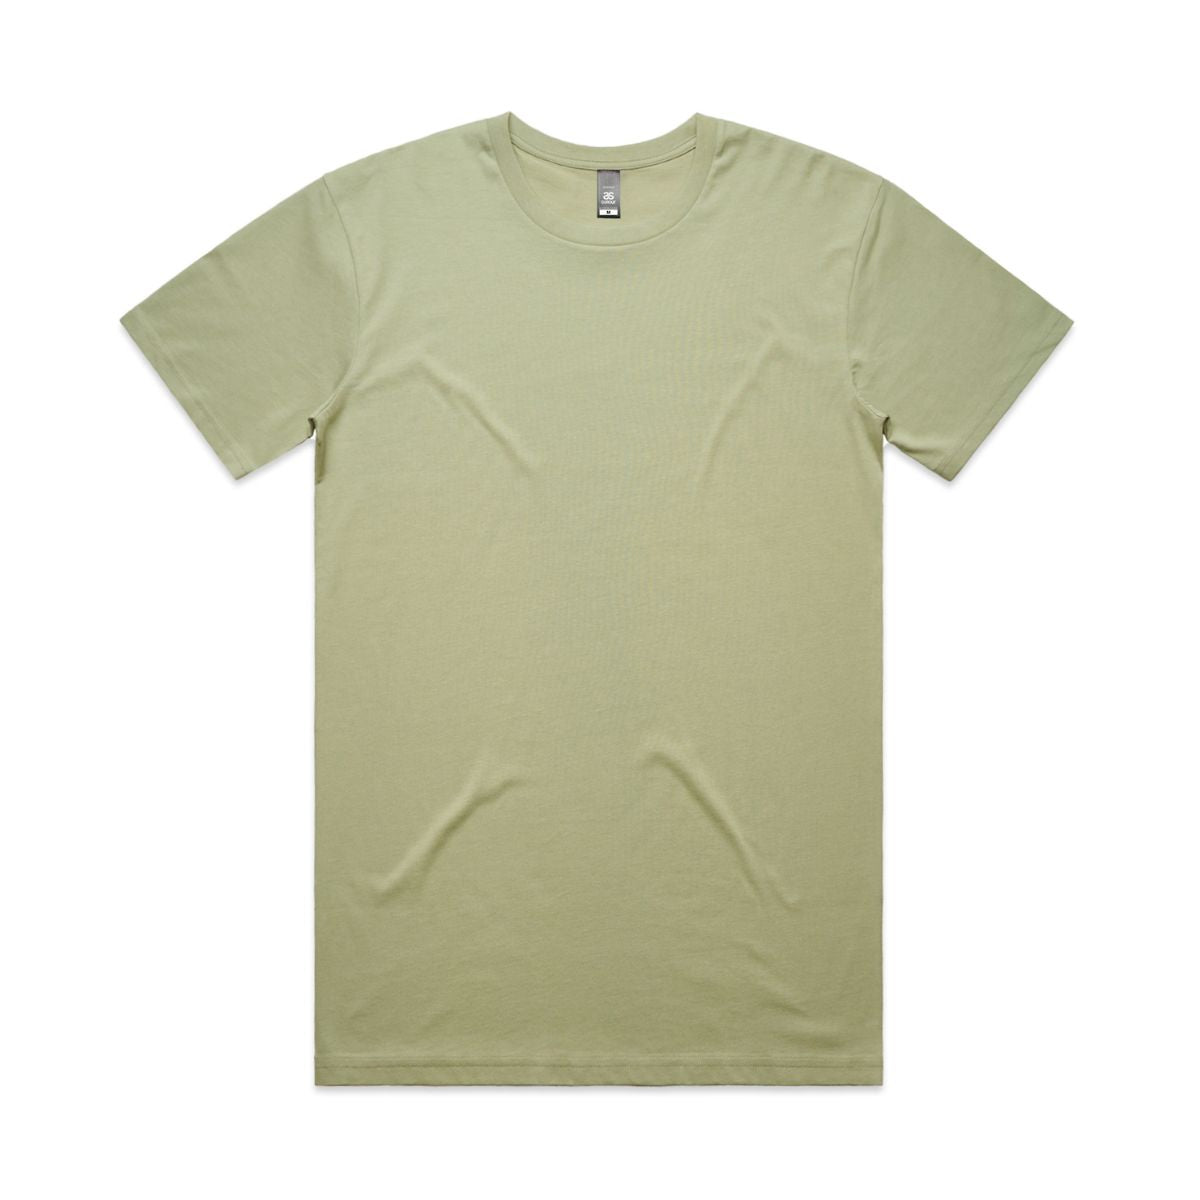 ascolour Men's Staple Tee - Green Shades 5001